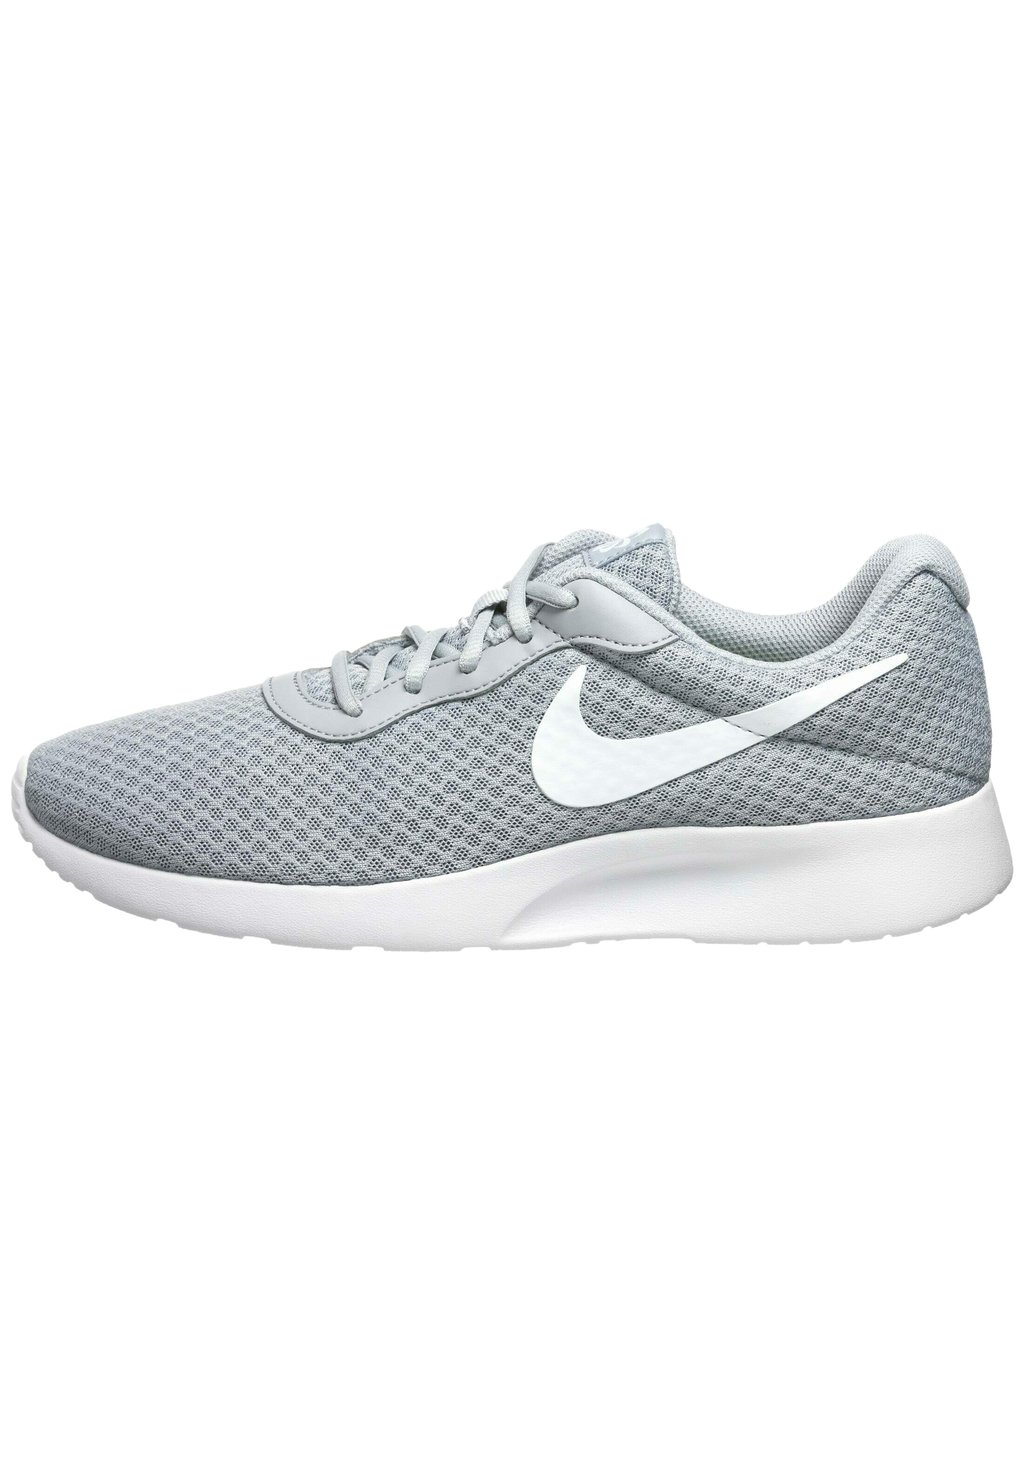 Низкие кроссовки Nike Tanjun M2Z2 Nike, цвет wolf grey/white-barely volt black